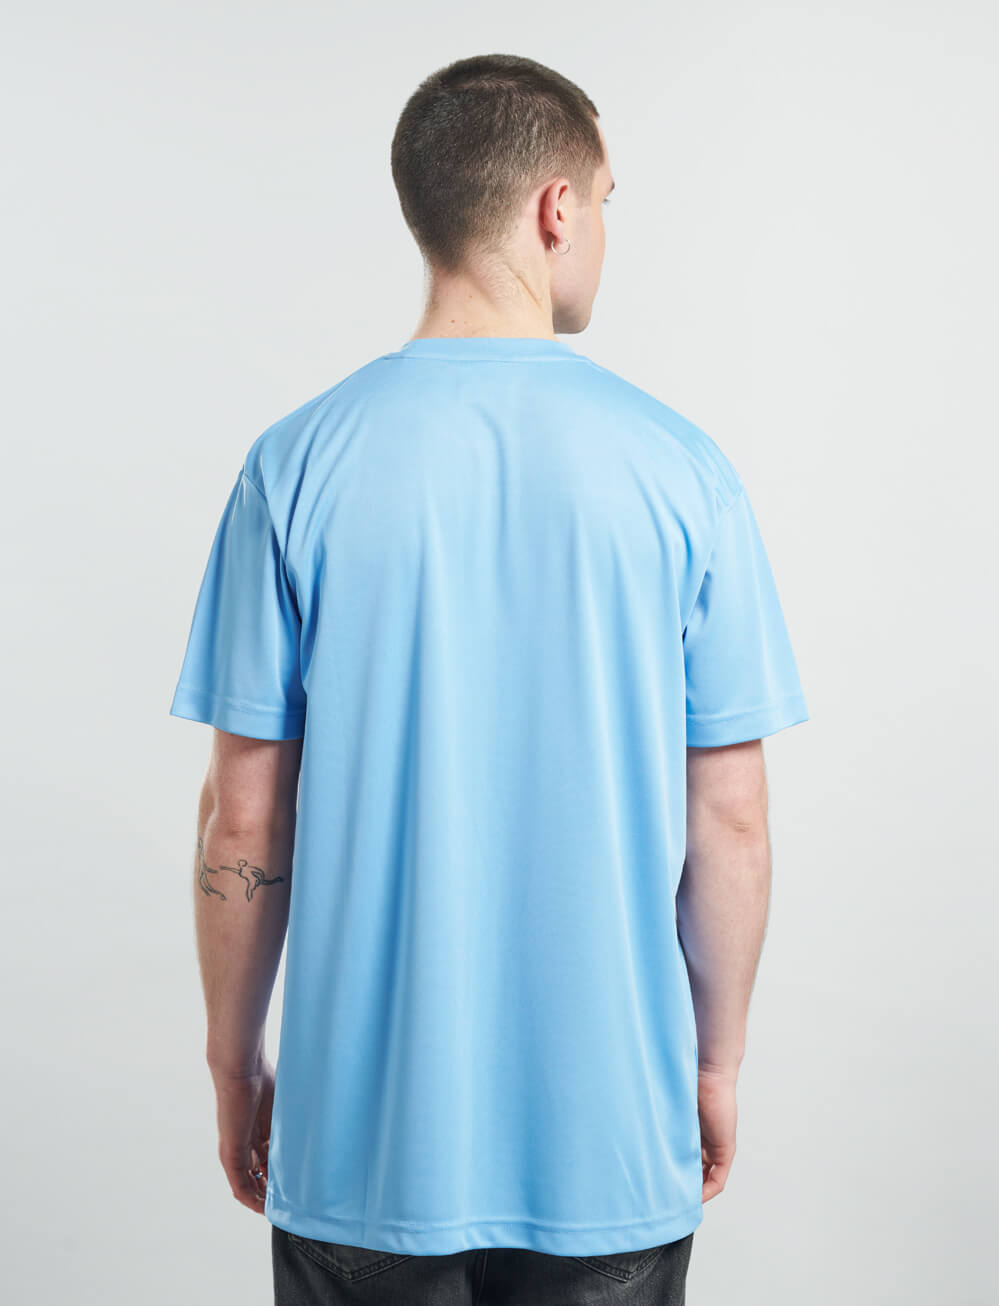 Official Manchester City Stripe T-Shirt - Sky Blue - The World Football Store